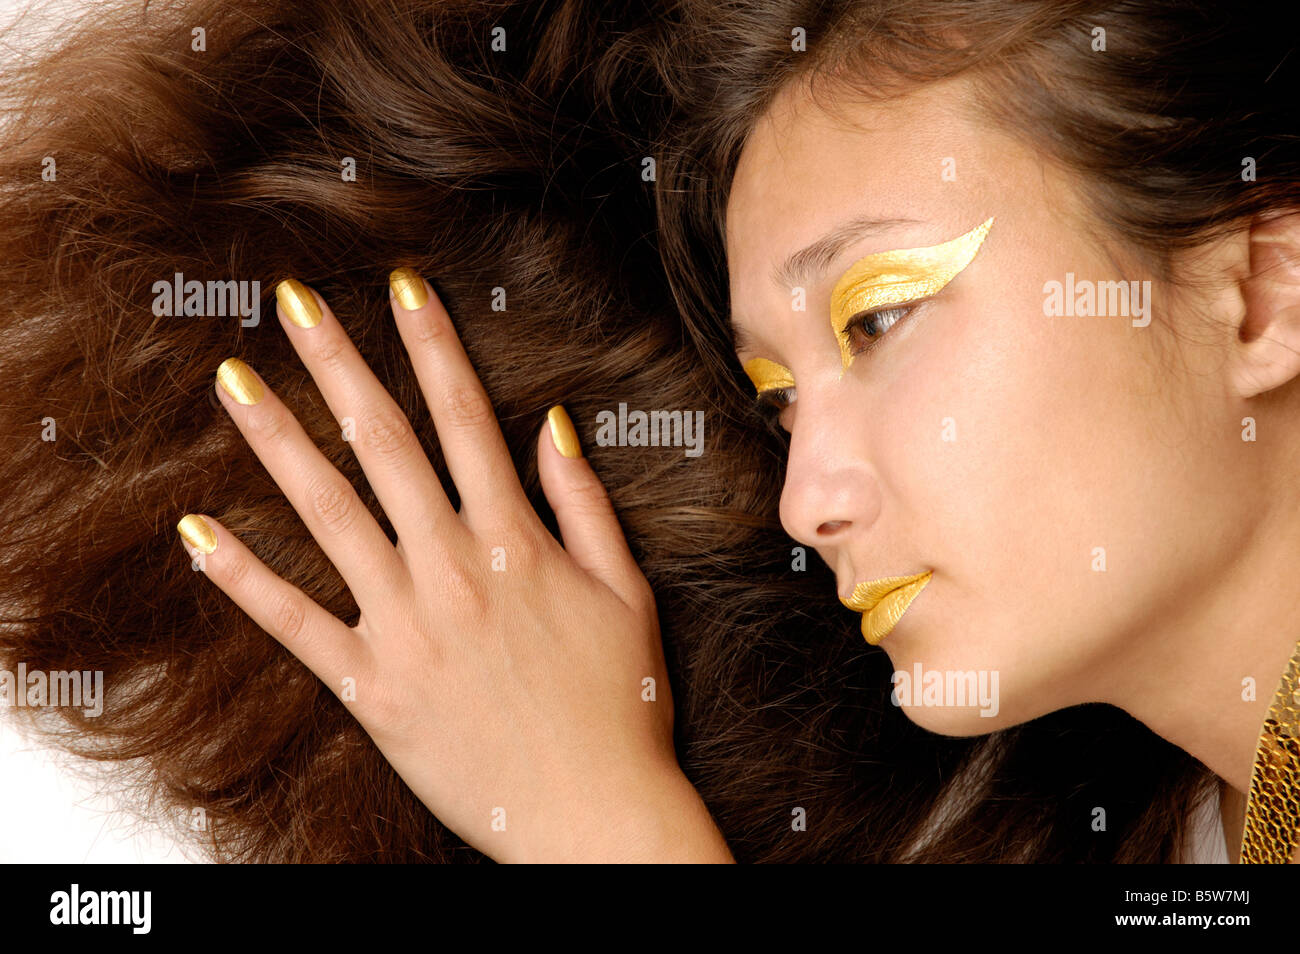 Woman with golden makeup Stock Photo